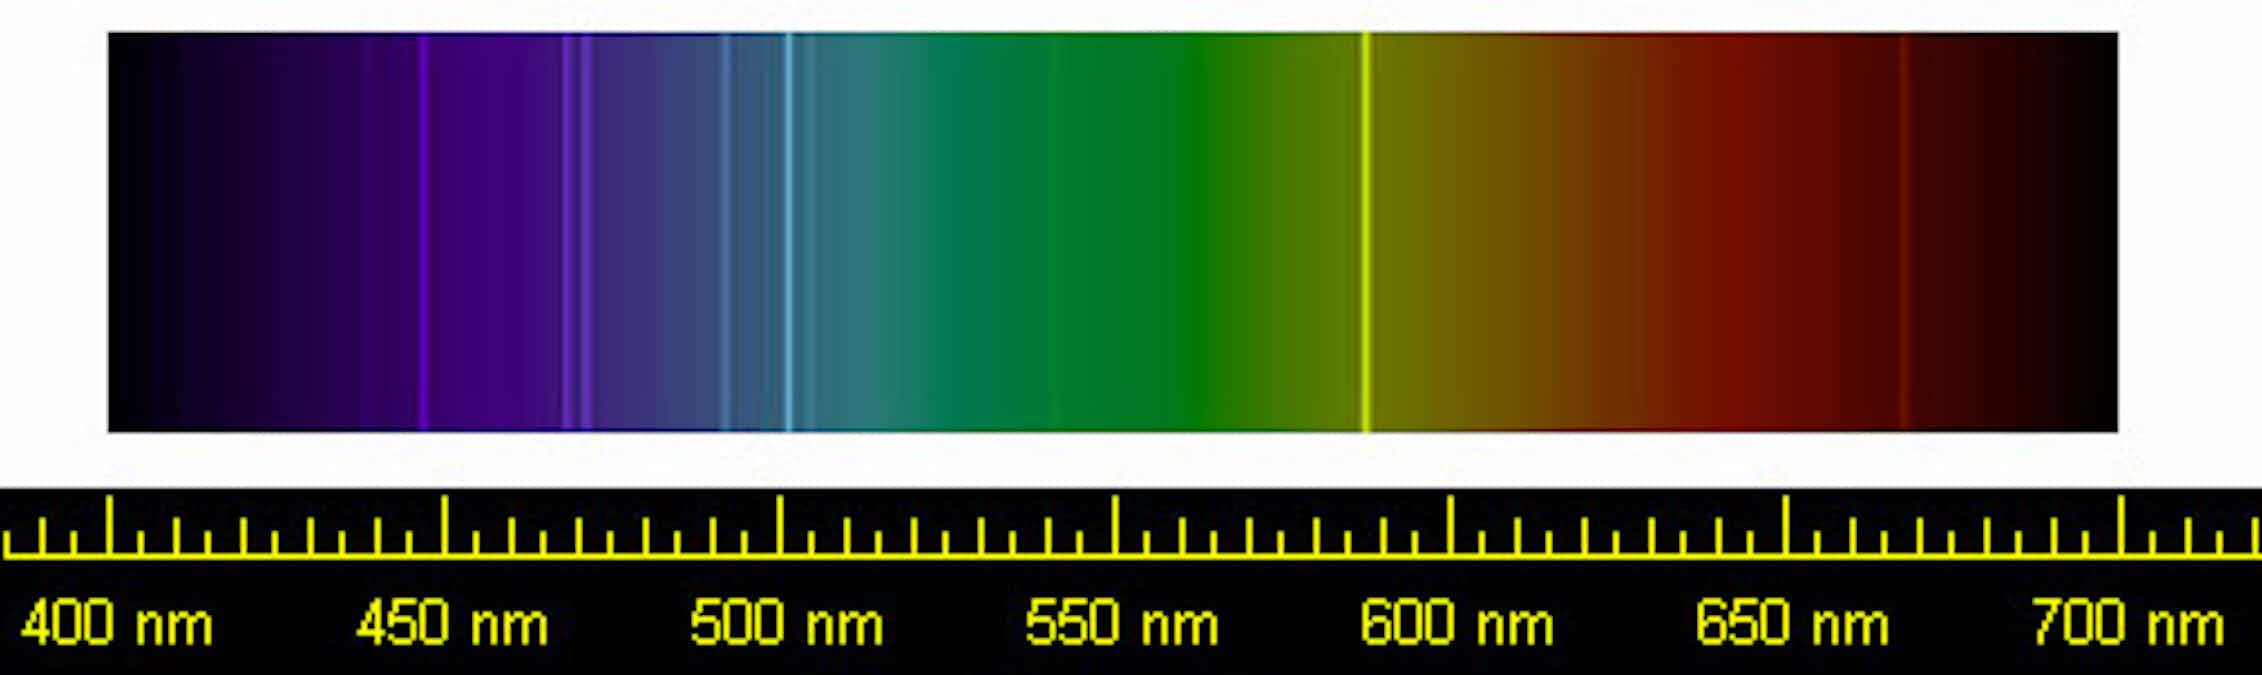 Линейчатый спектр излучения. Линейчатый спектр излучения водорода. Линейчатый спектр излучения гелия. Линейчатый спектр испускания водорода.